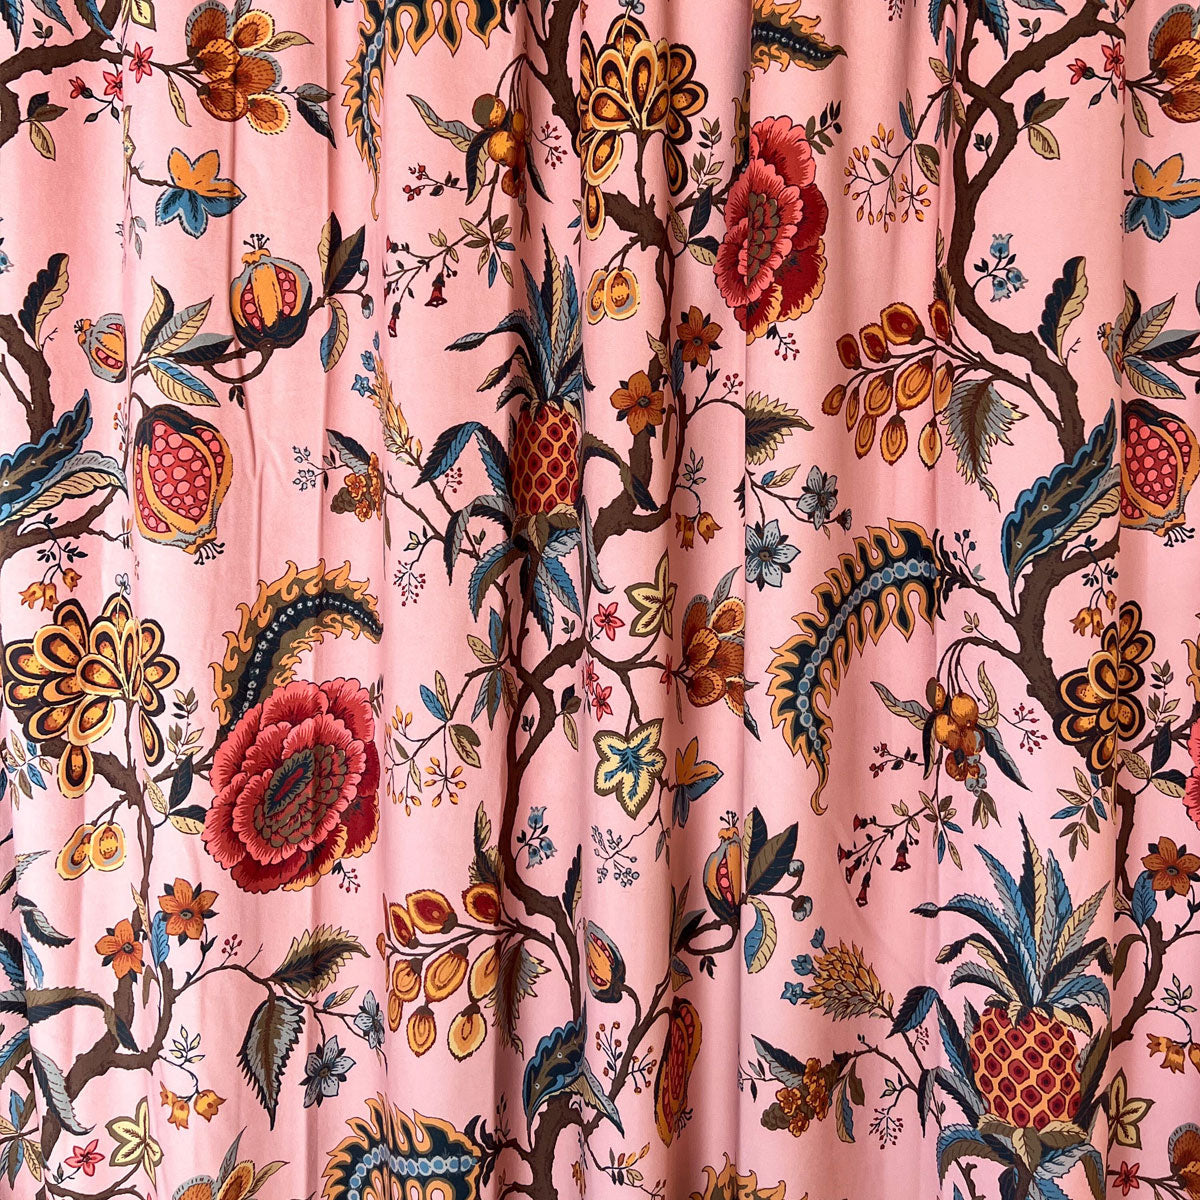 Pompadour Blush Printed Velvet Panel Curtain